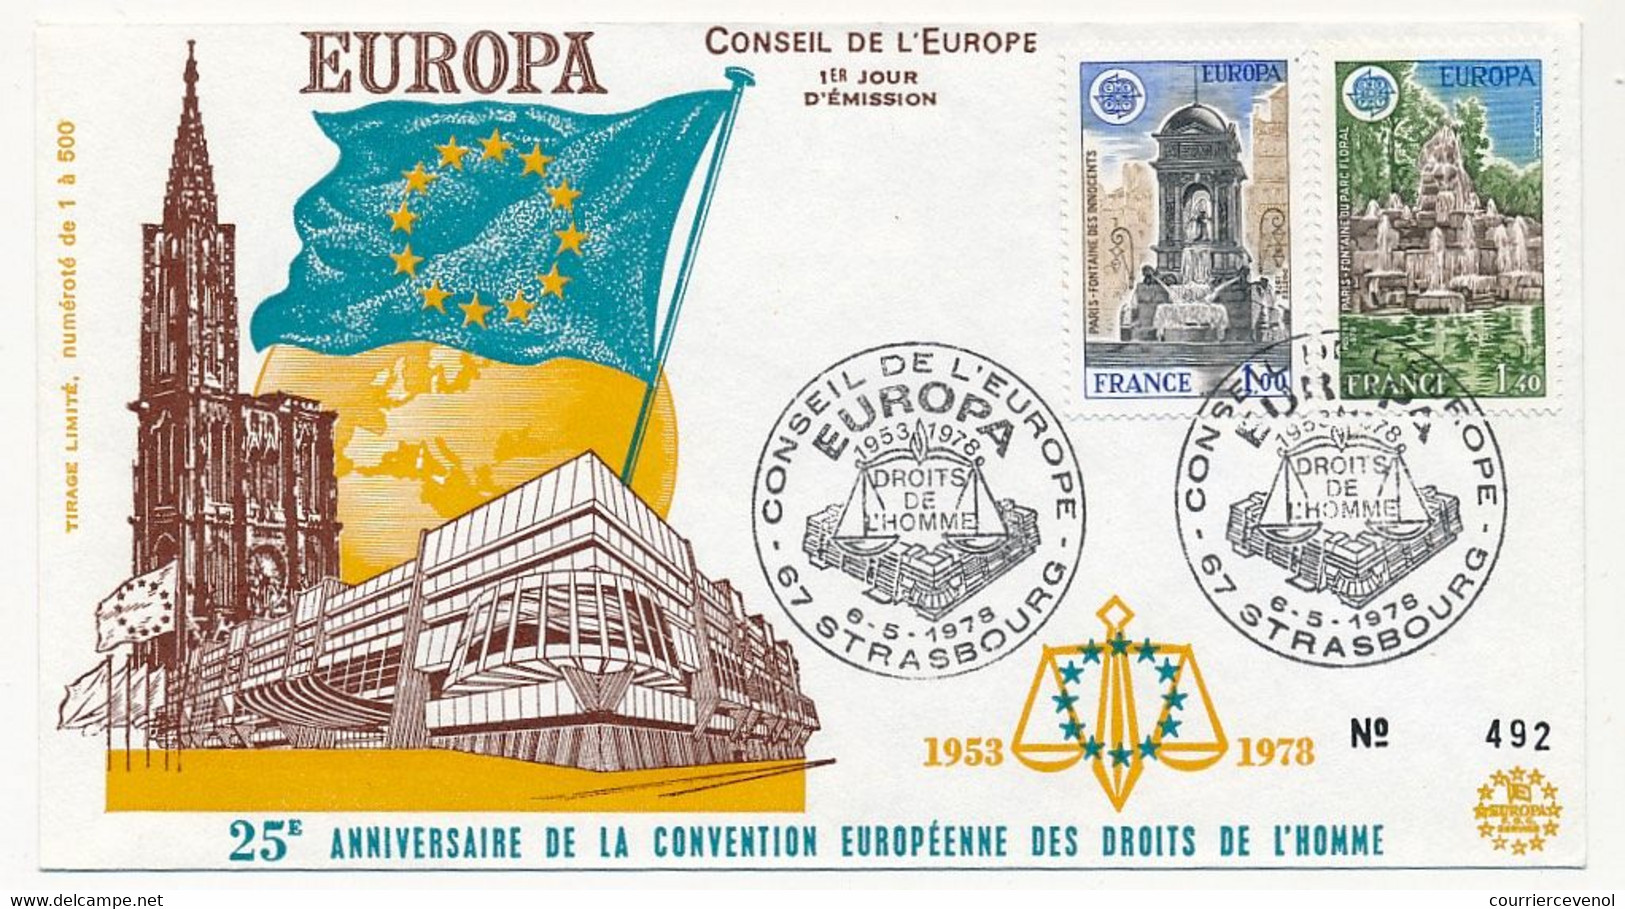 FRANCE - 2 Enveloppes FDC - EUROPA 1978 - Conseil De L'Europe Strasbourg 6/5/1978 - 1970-1979